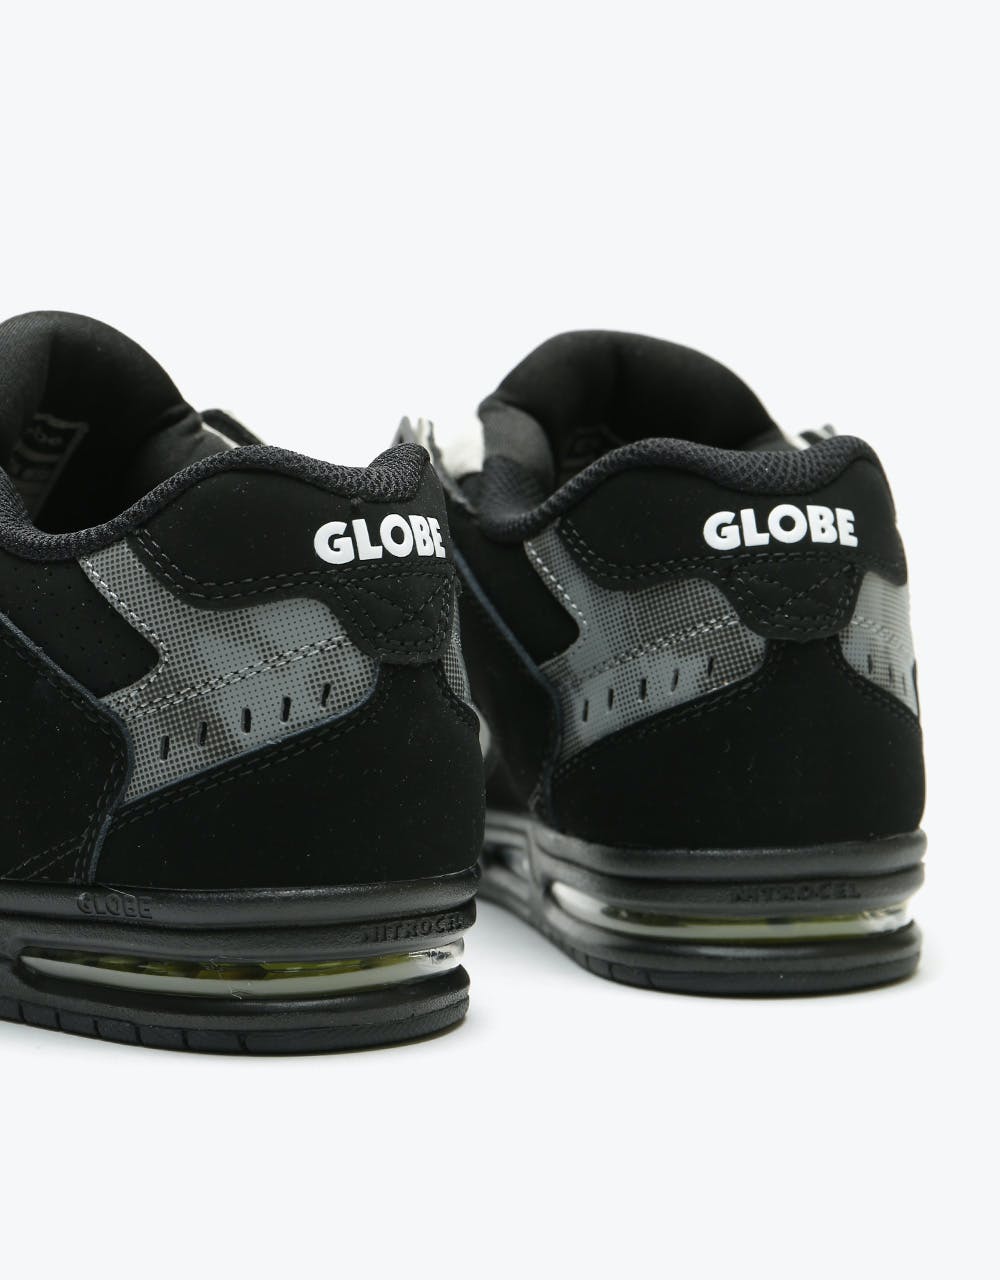 Globe Sabre Skate Shoes - Grey/Black Split